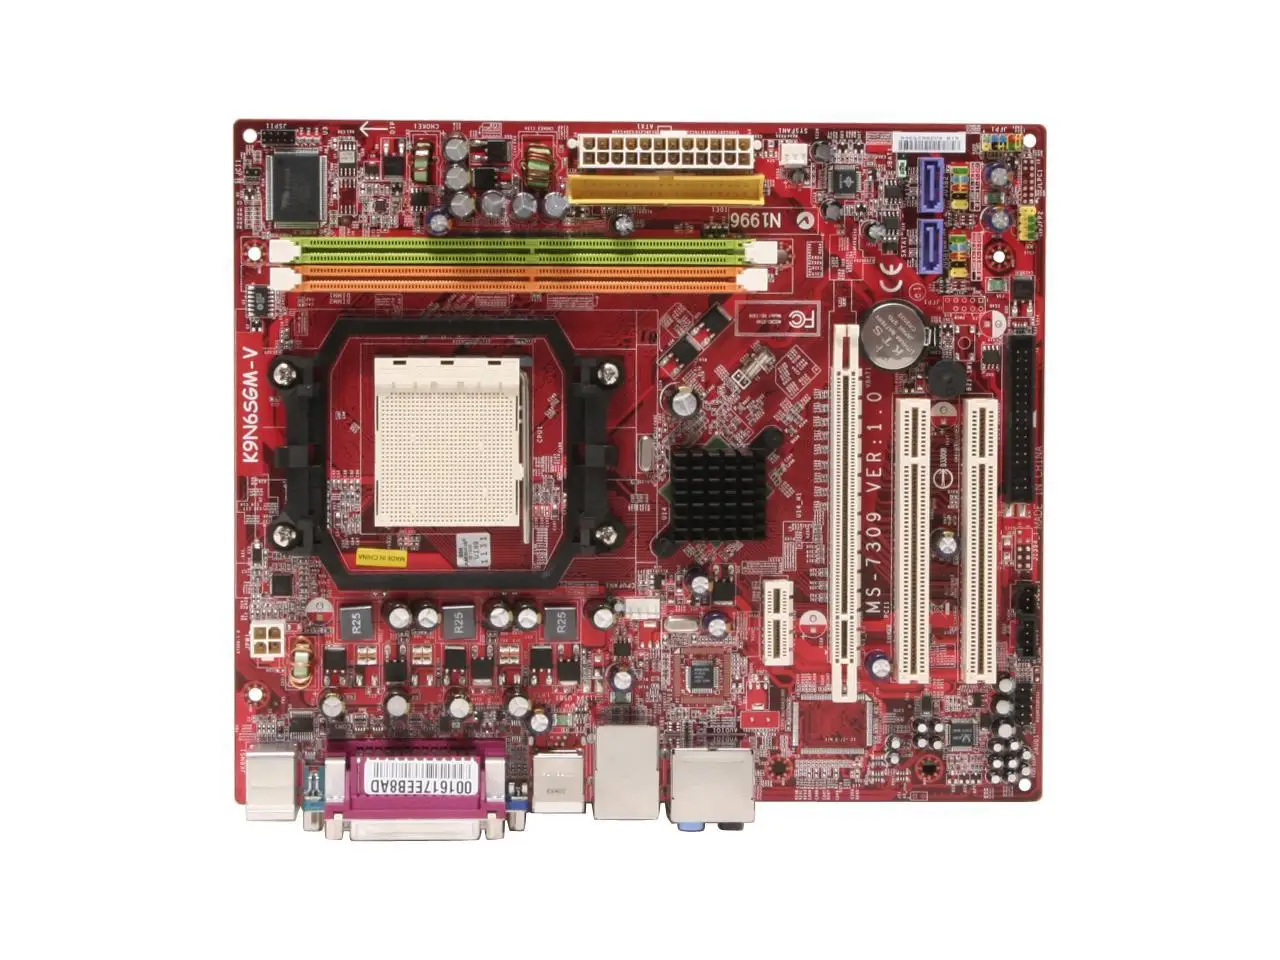 

MSI K9N6SGM-V Motherboard Socket AM2 DDR2 PCI-E 8X SATA II Micro ATX NVIDIA NF6100-405 Motherboard For Athlon64/Athlon 64 X2 cp